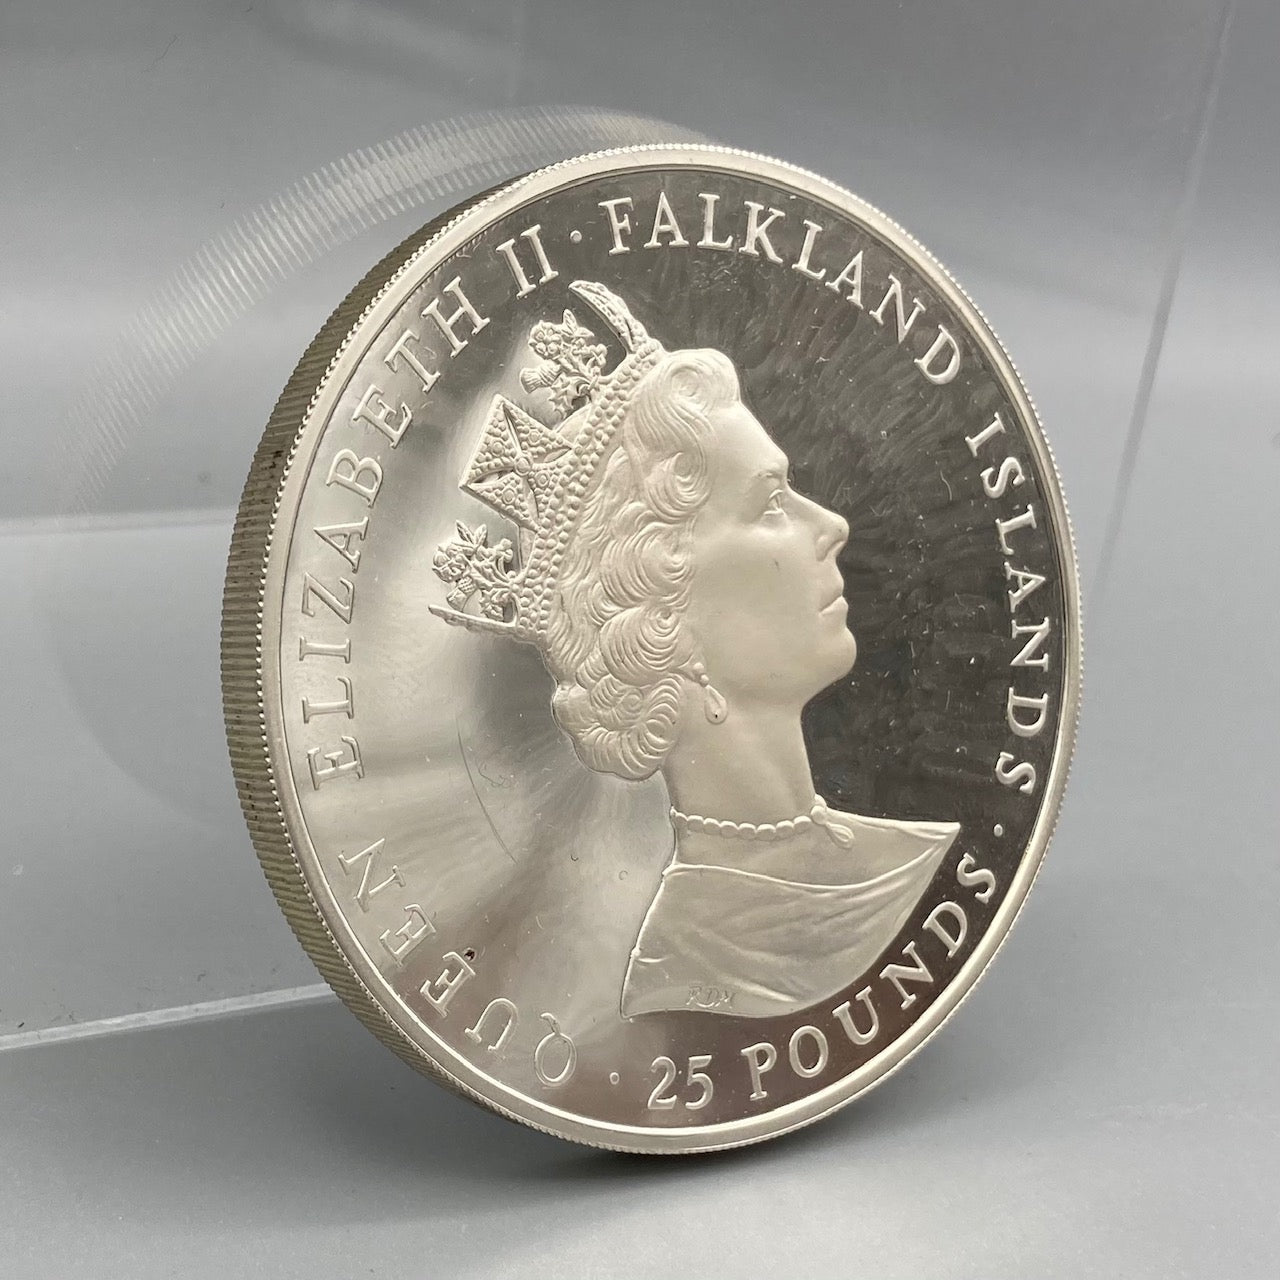 25 Pounds - Elizabeth II 100 years of self sufficiency